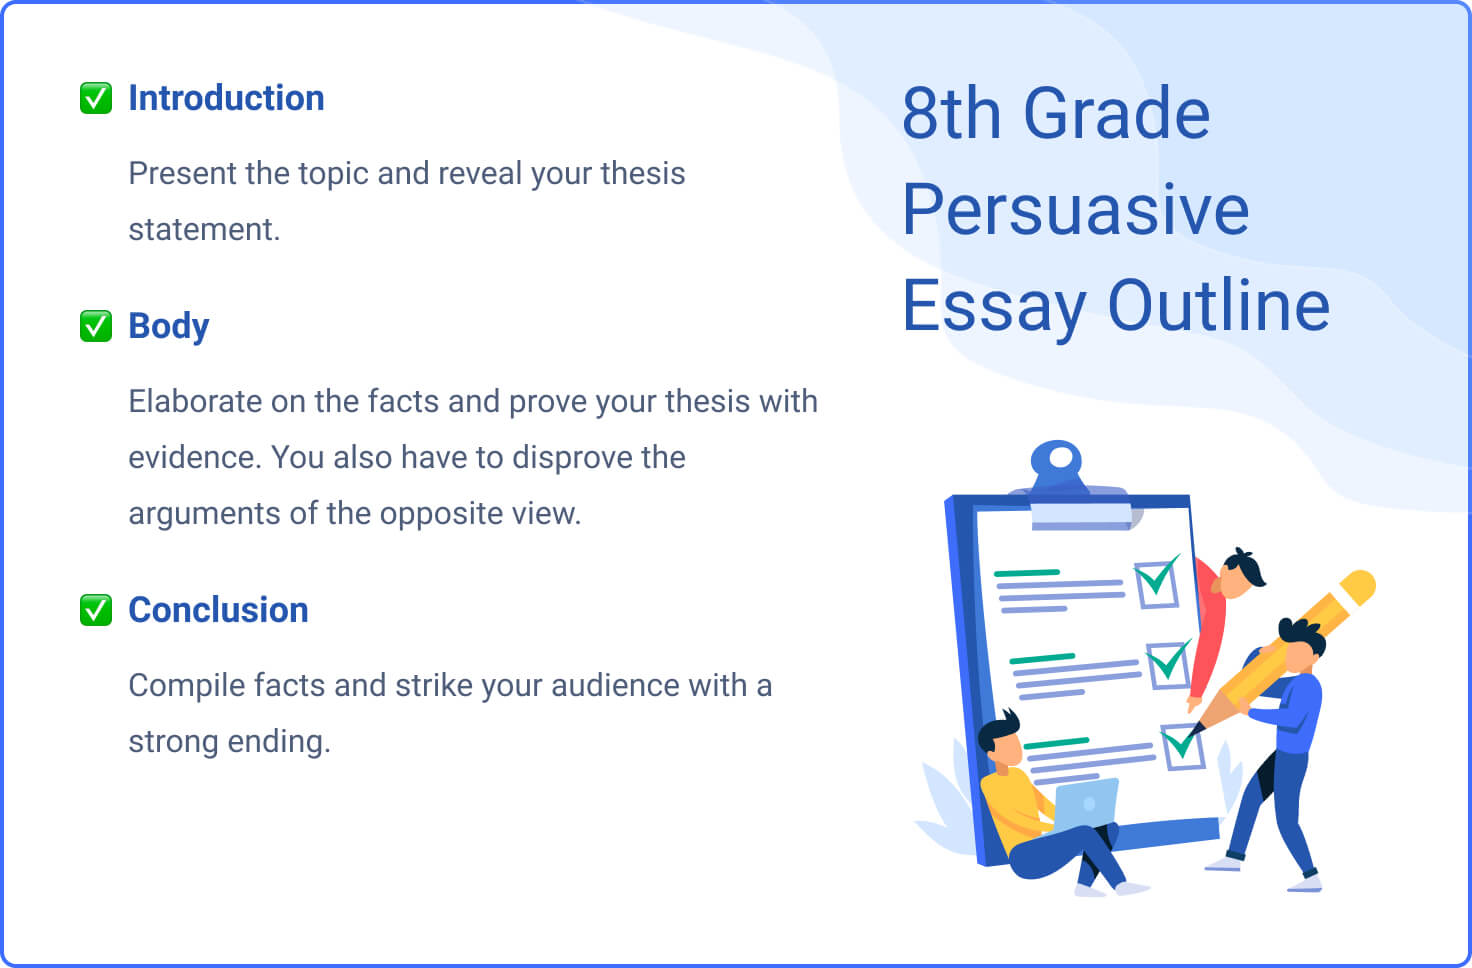 argumentative essay examples middle school